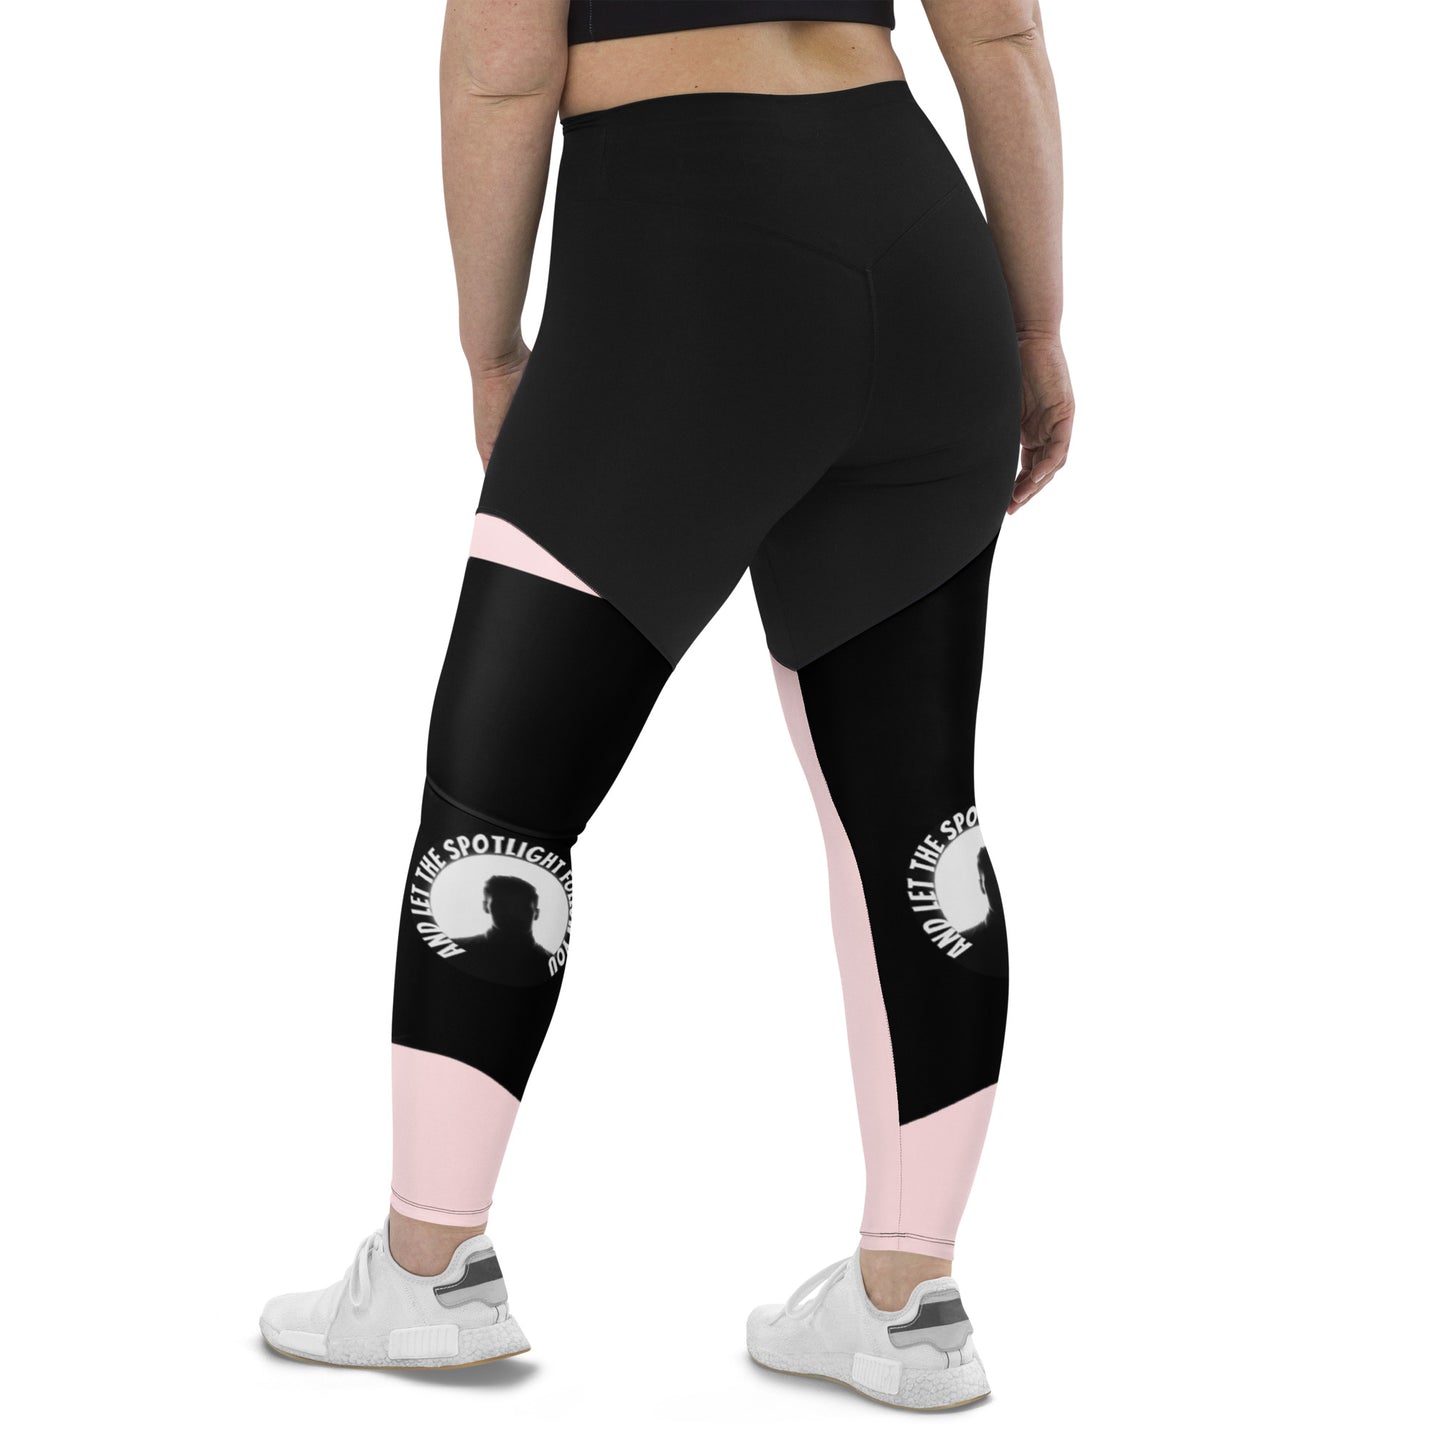 LBS Sports Leggings Plus Size - Pink